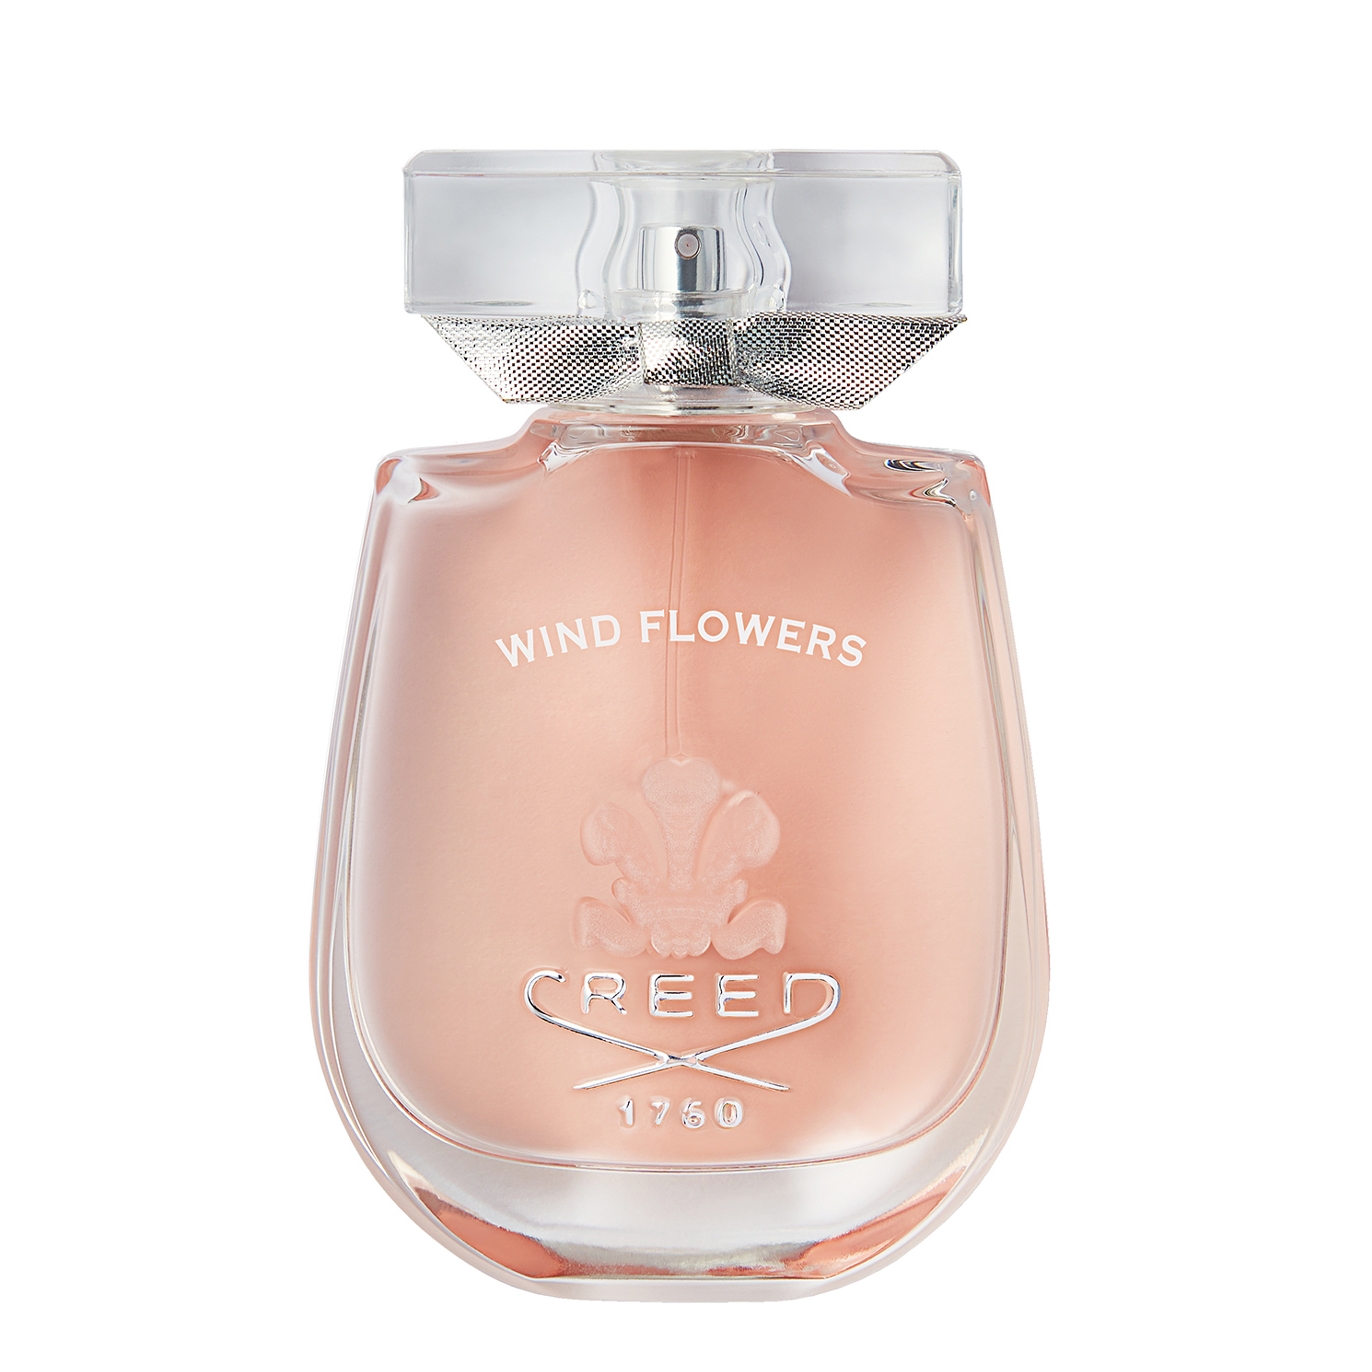 Creed Wind Flowers Eau de Parfum